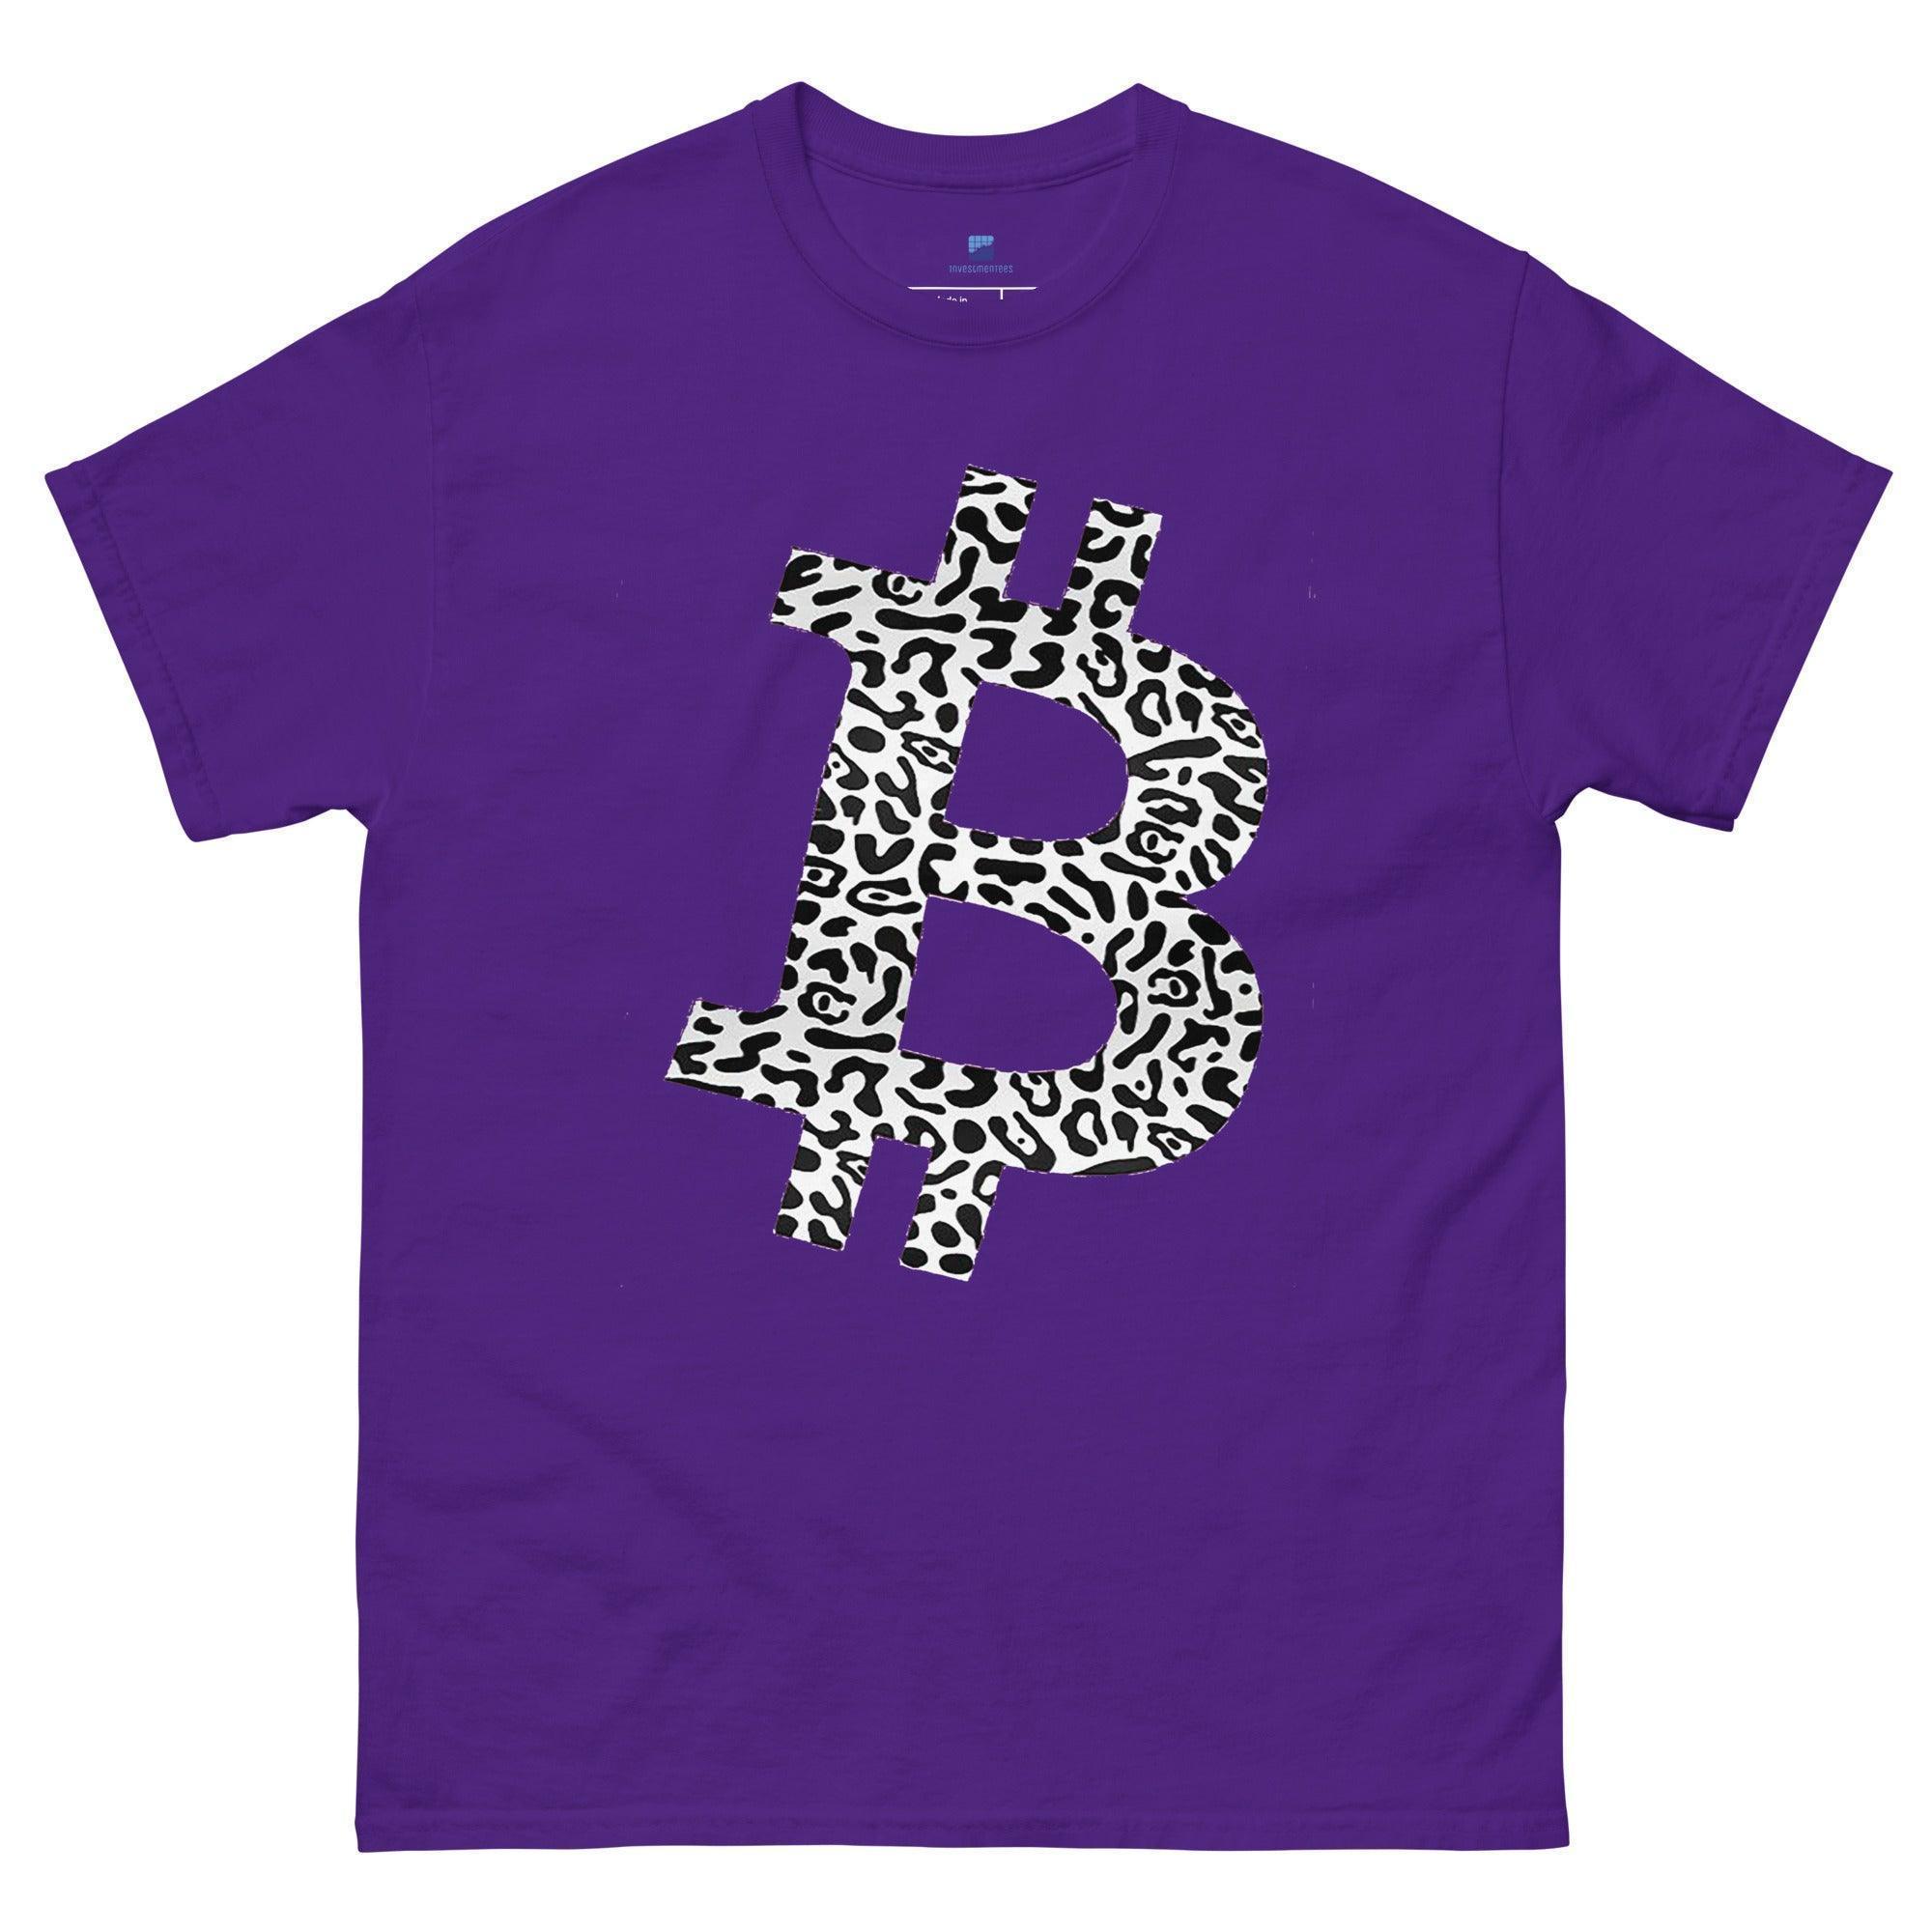 Bitcoin Animal Print T-Shirt - InvestmenTees